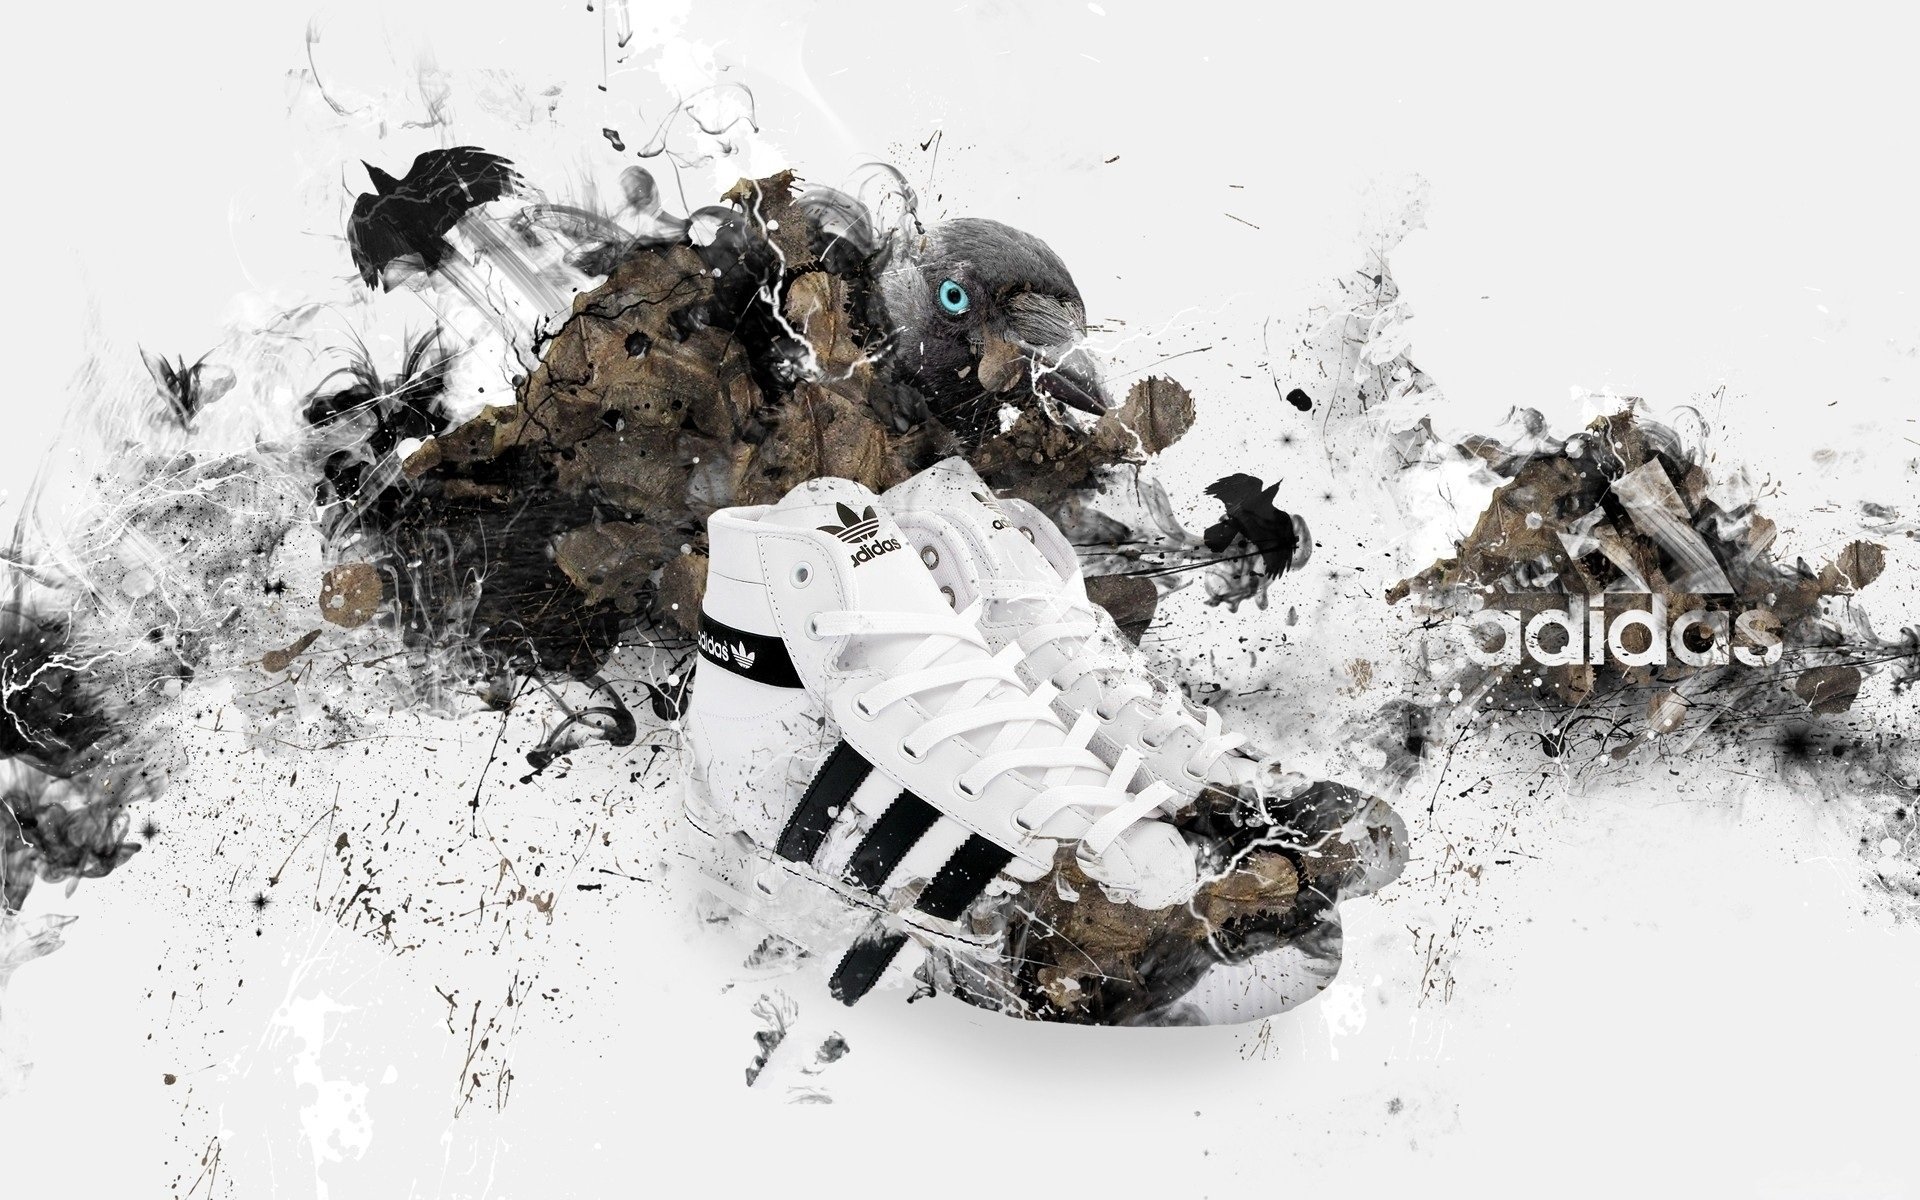 Adidas краски без смс